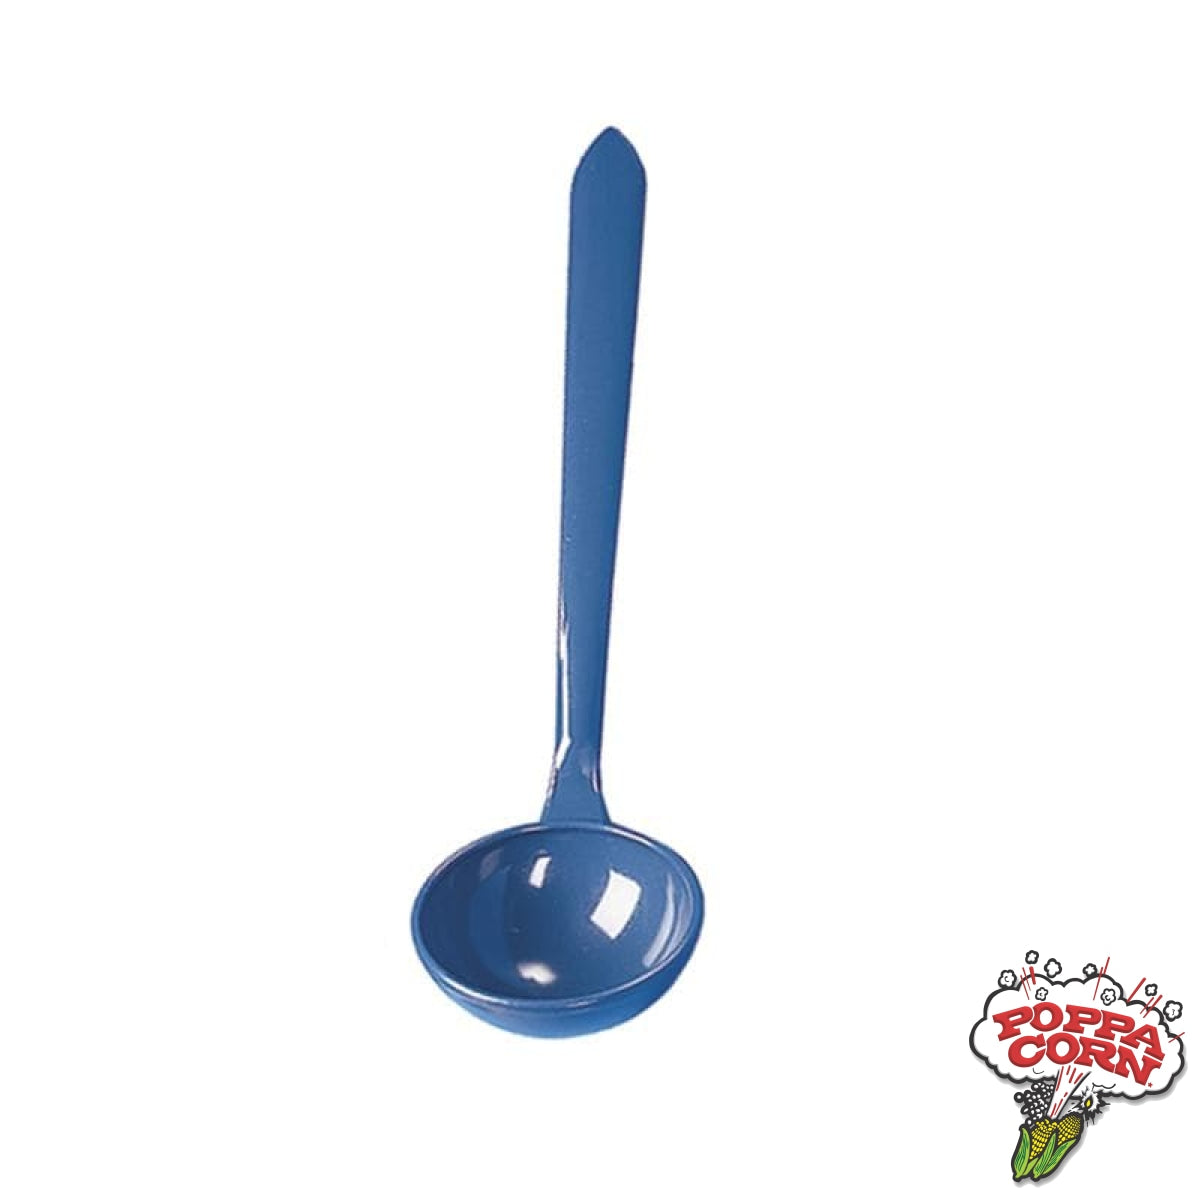 GM1088 - Plastic Sno-Kone® Dipper (Blue) - Poppa Corn Corp